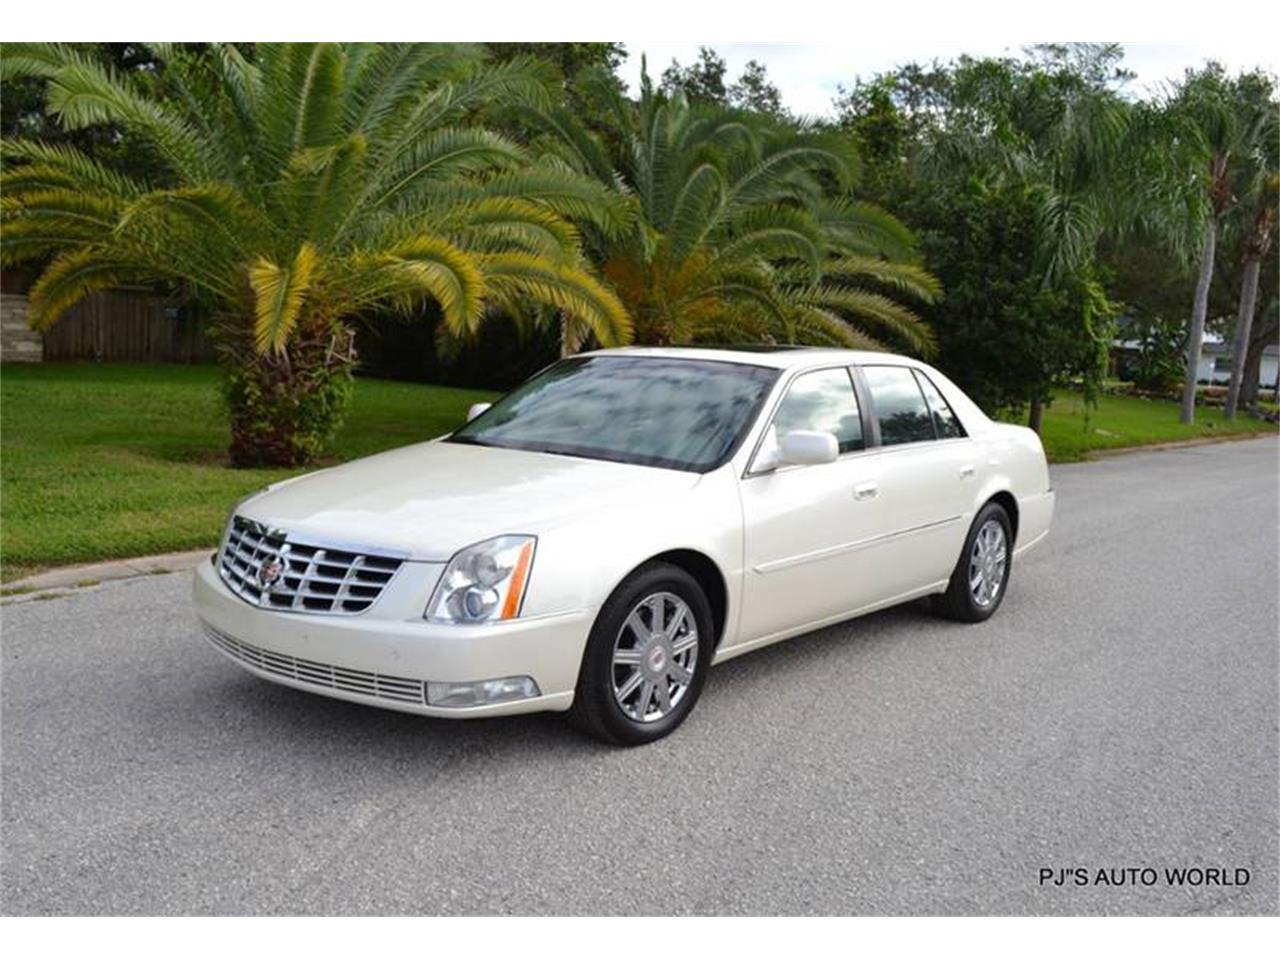 2008 Cadillac DTS for Sale | ClassicCars.com | CC-1031788